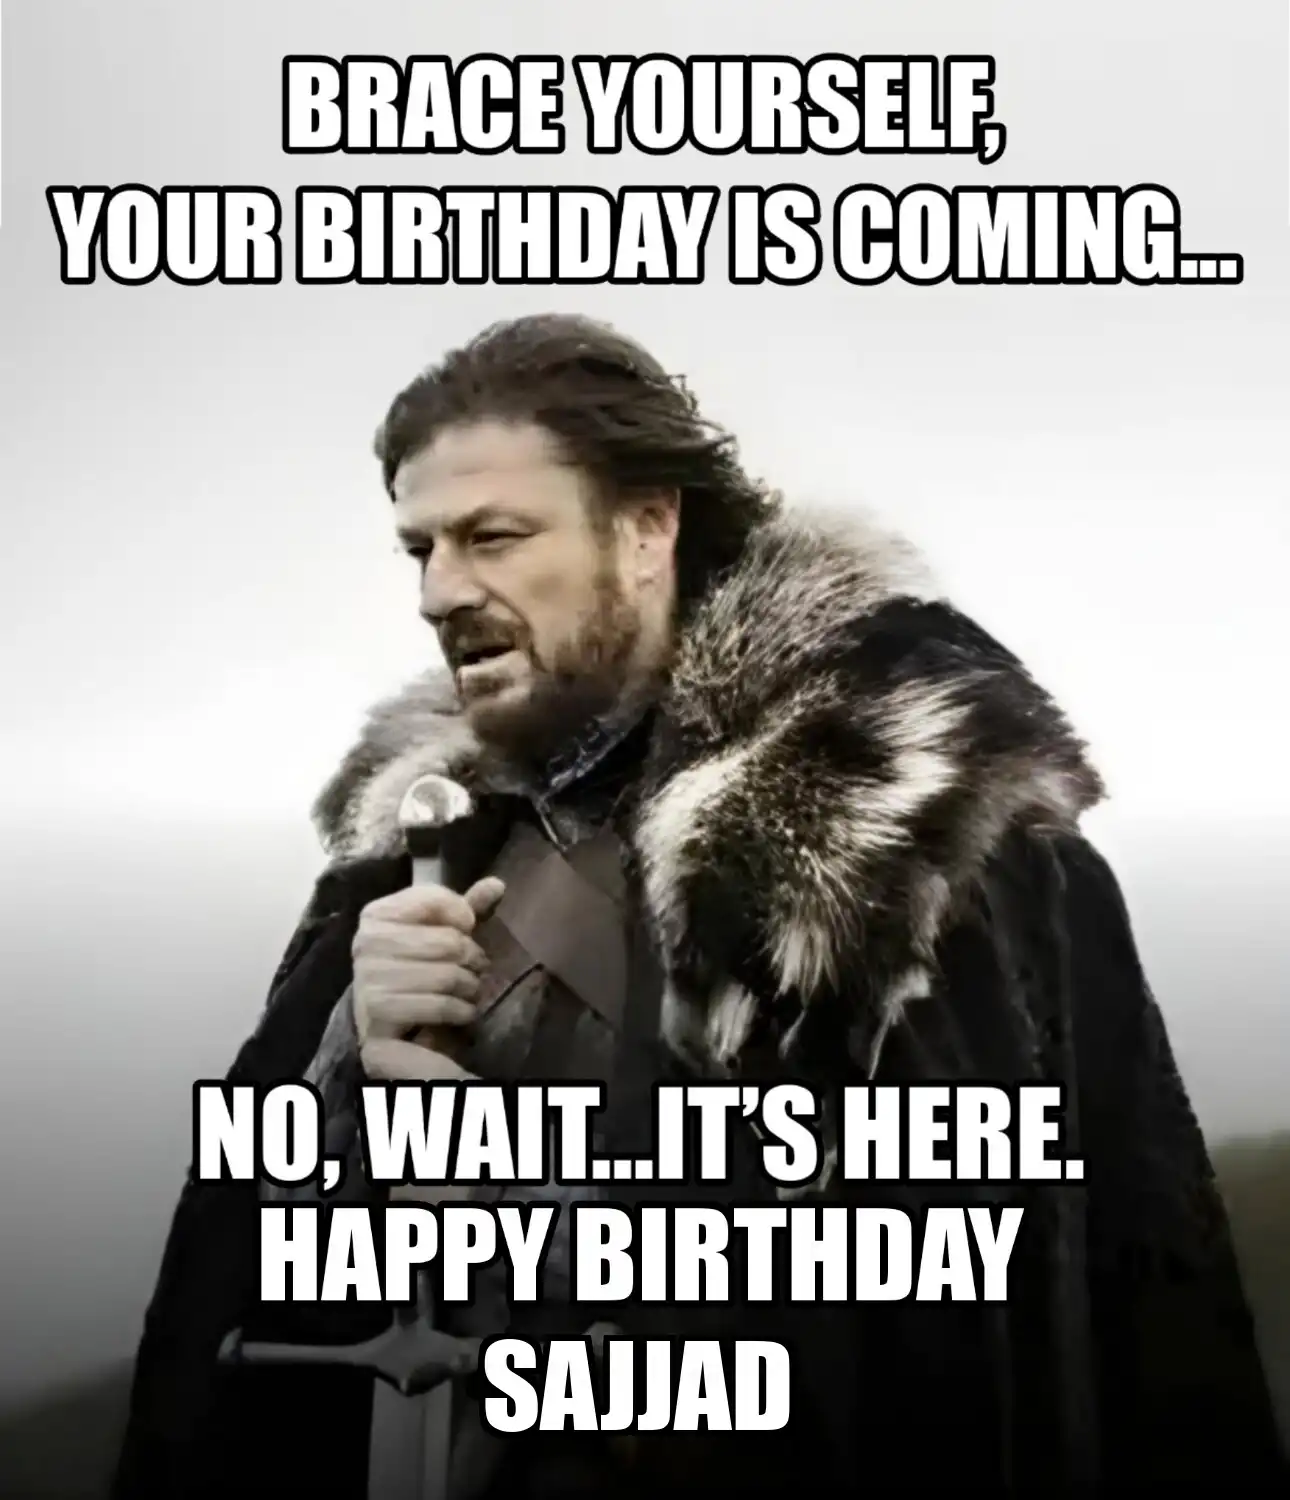 Happy Birthday Sajjad Brace Yourself Your Birthday Is Coming Meme